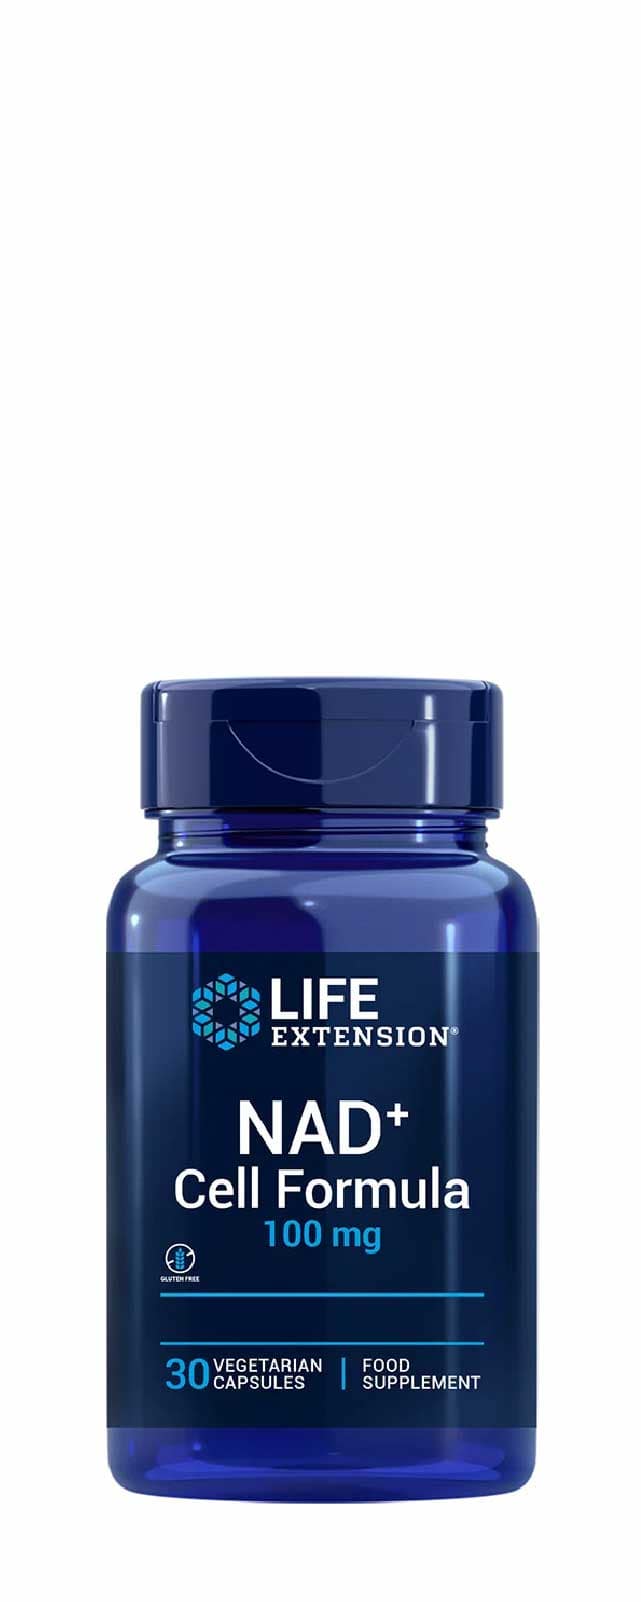 Koop Life Extension NAD+ Cell Formula, 100 mg bij LiveHelfi